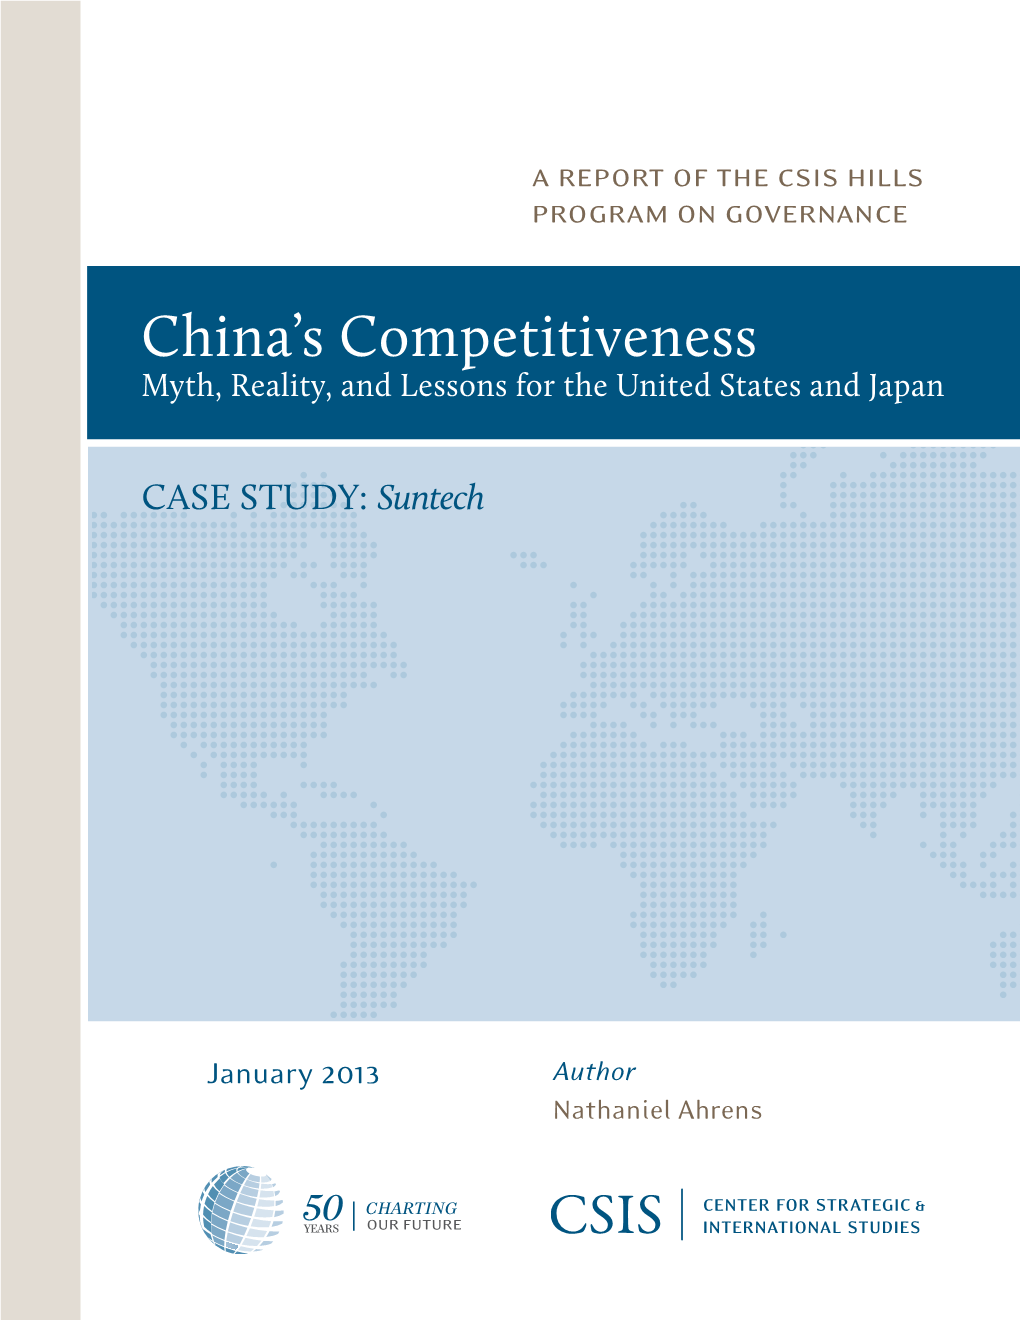 China's Competitiveness: Case Study: Suntech